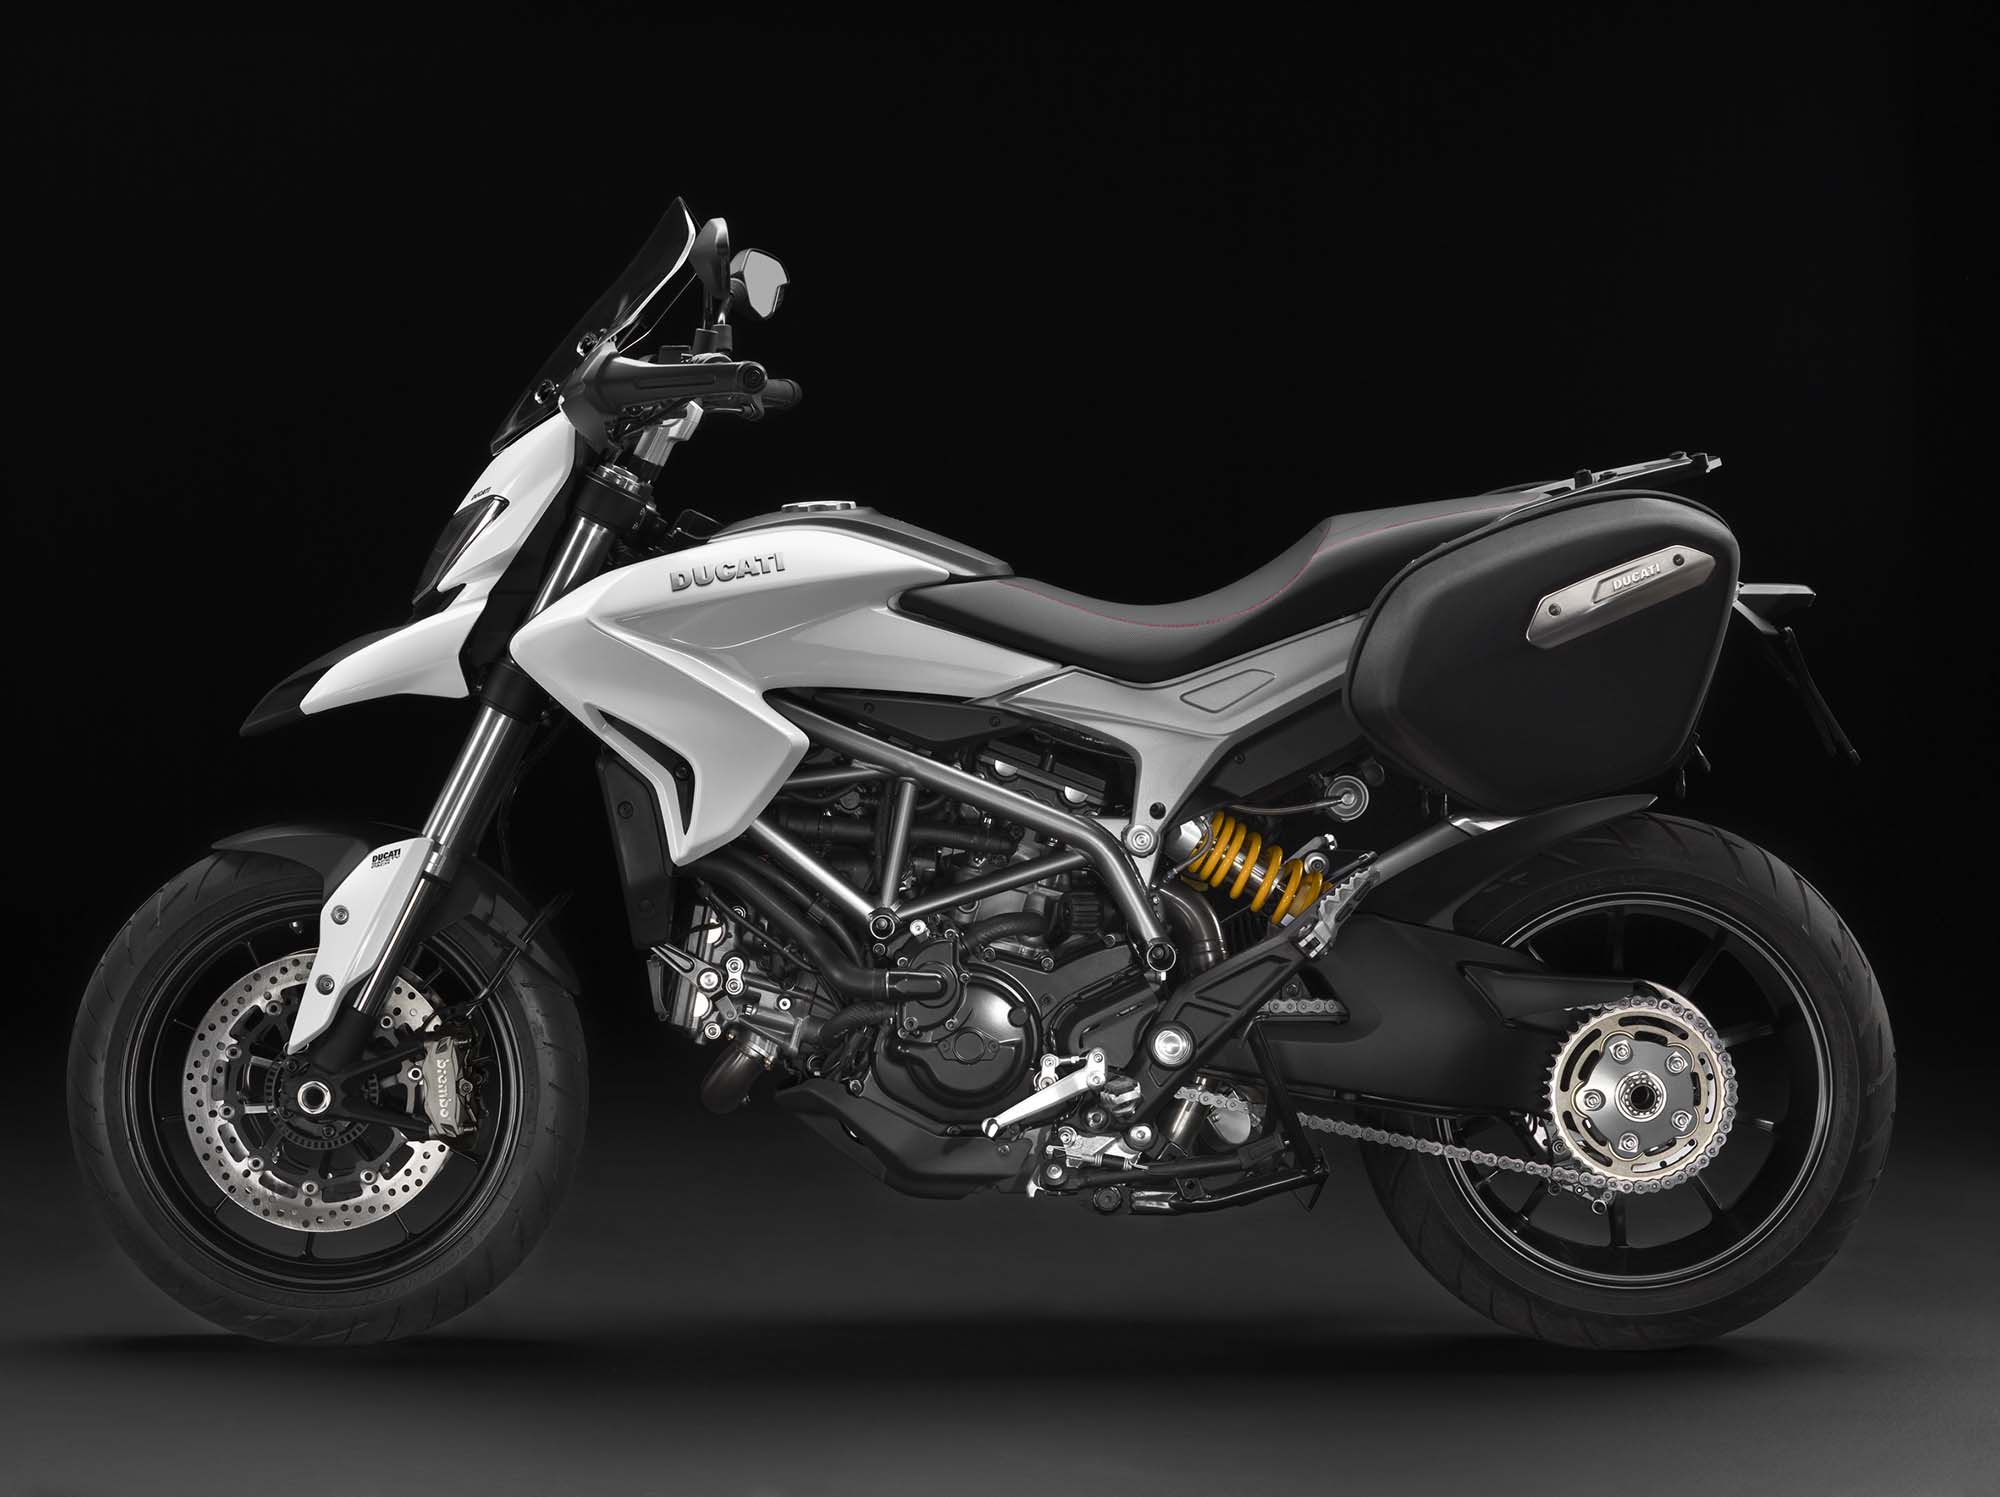 2013 Ducati Hyperstrada - $13,295 & Ready to Tour - Asphalt & Rubber